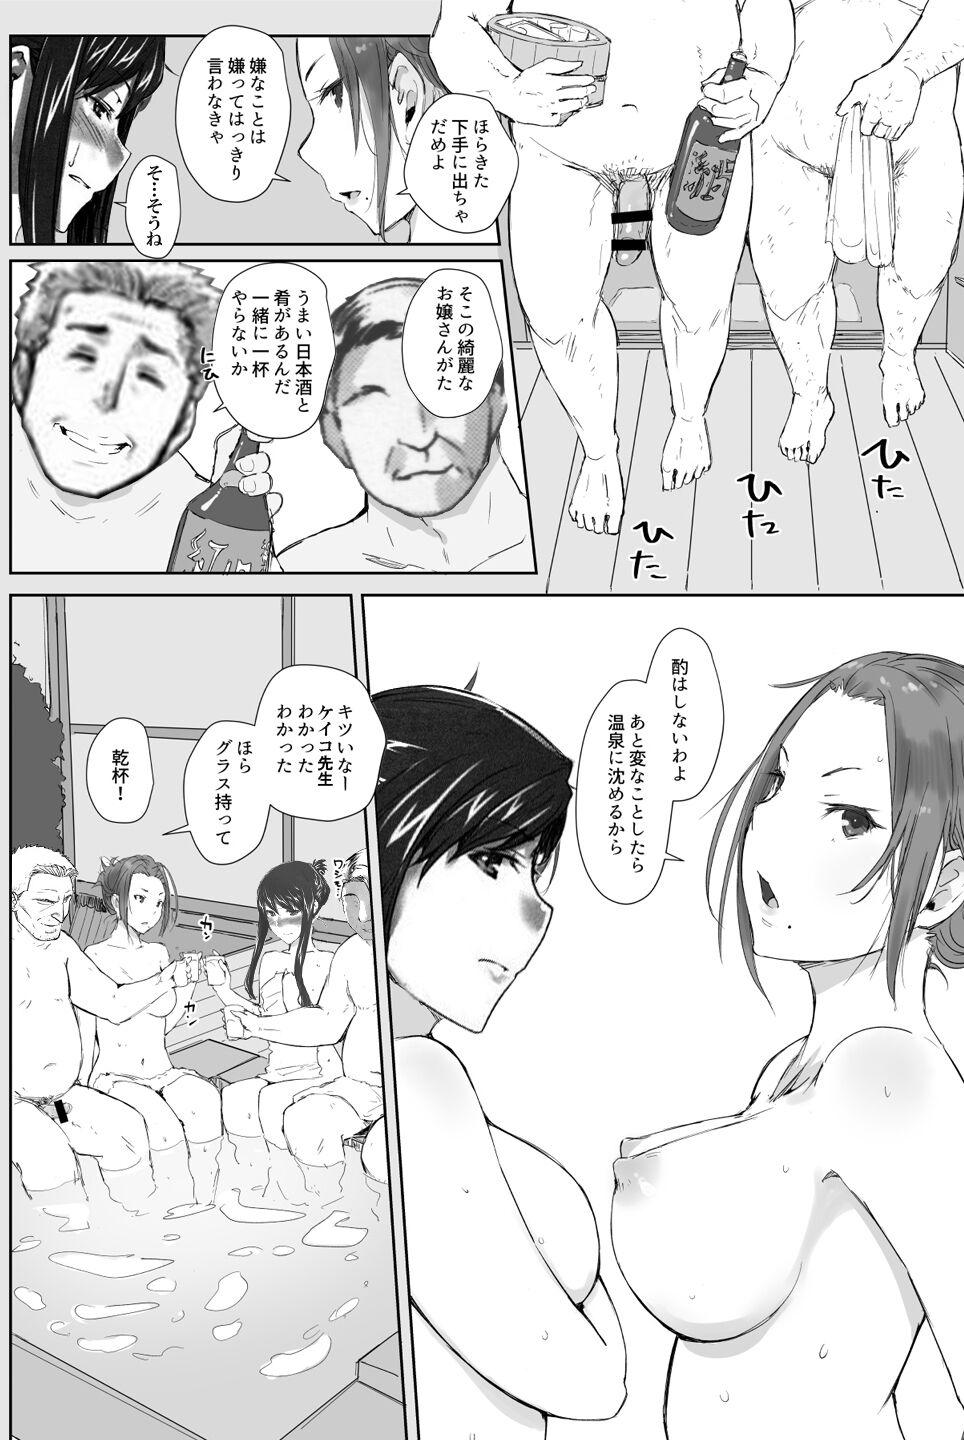 Sakiko-san in delusion Vol.1 Ver.1.1 ~Sakiko-san's circumstance at an educational training~ Stupid Sakiko (collage) on-going 158